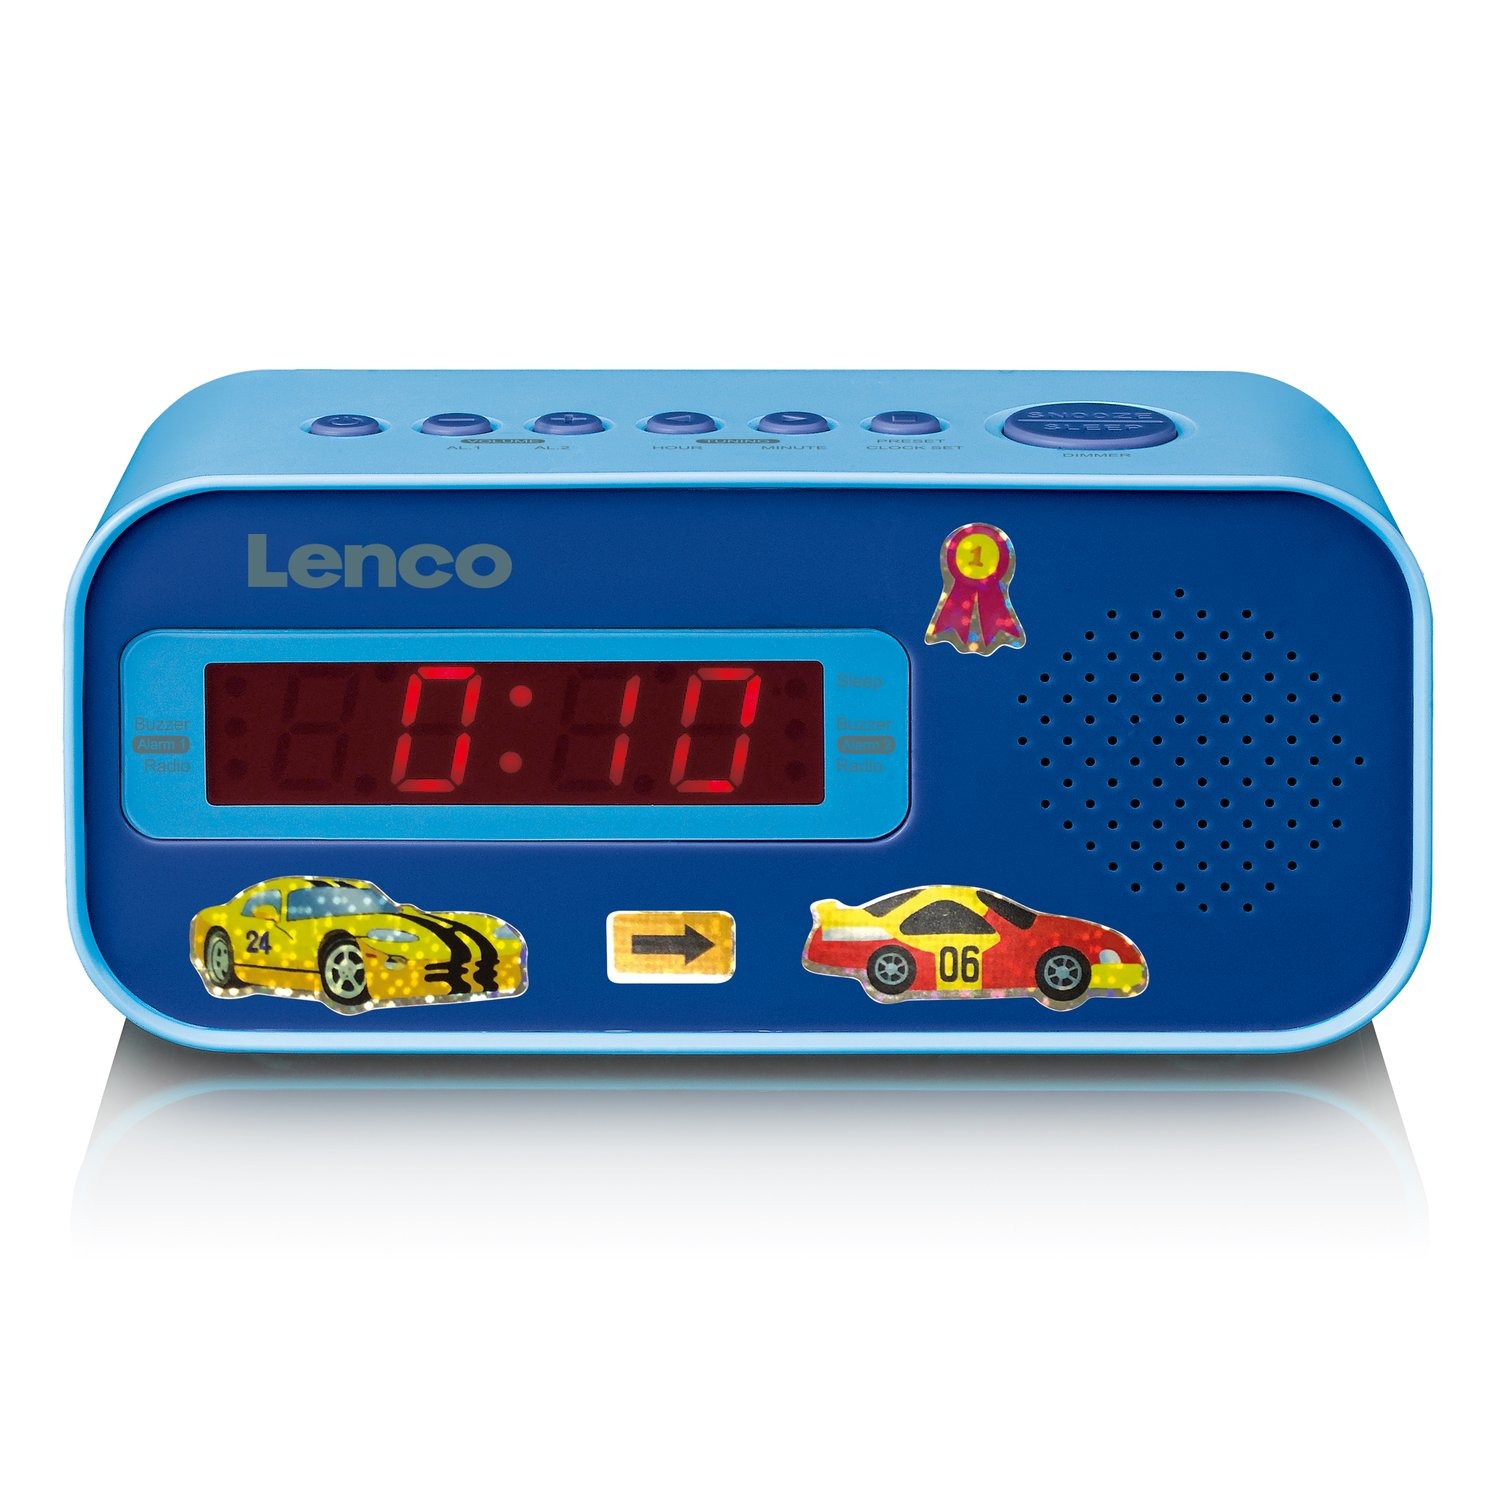 Lenco CR 250BU Wekkerradio met dual alarm blue online kopen